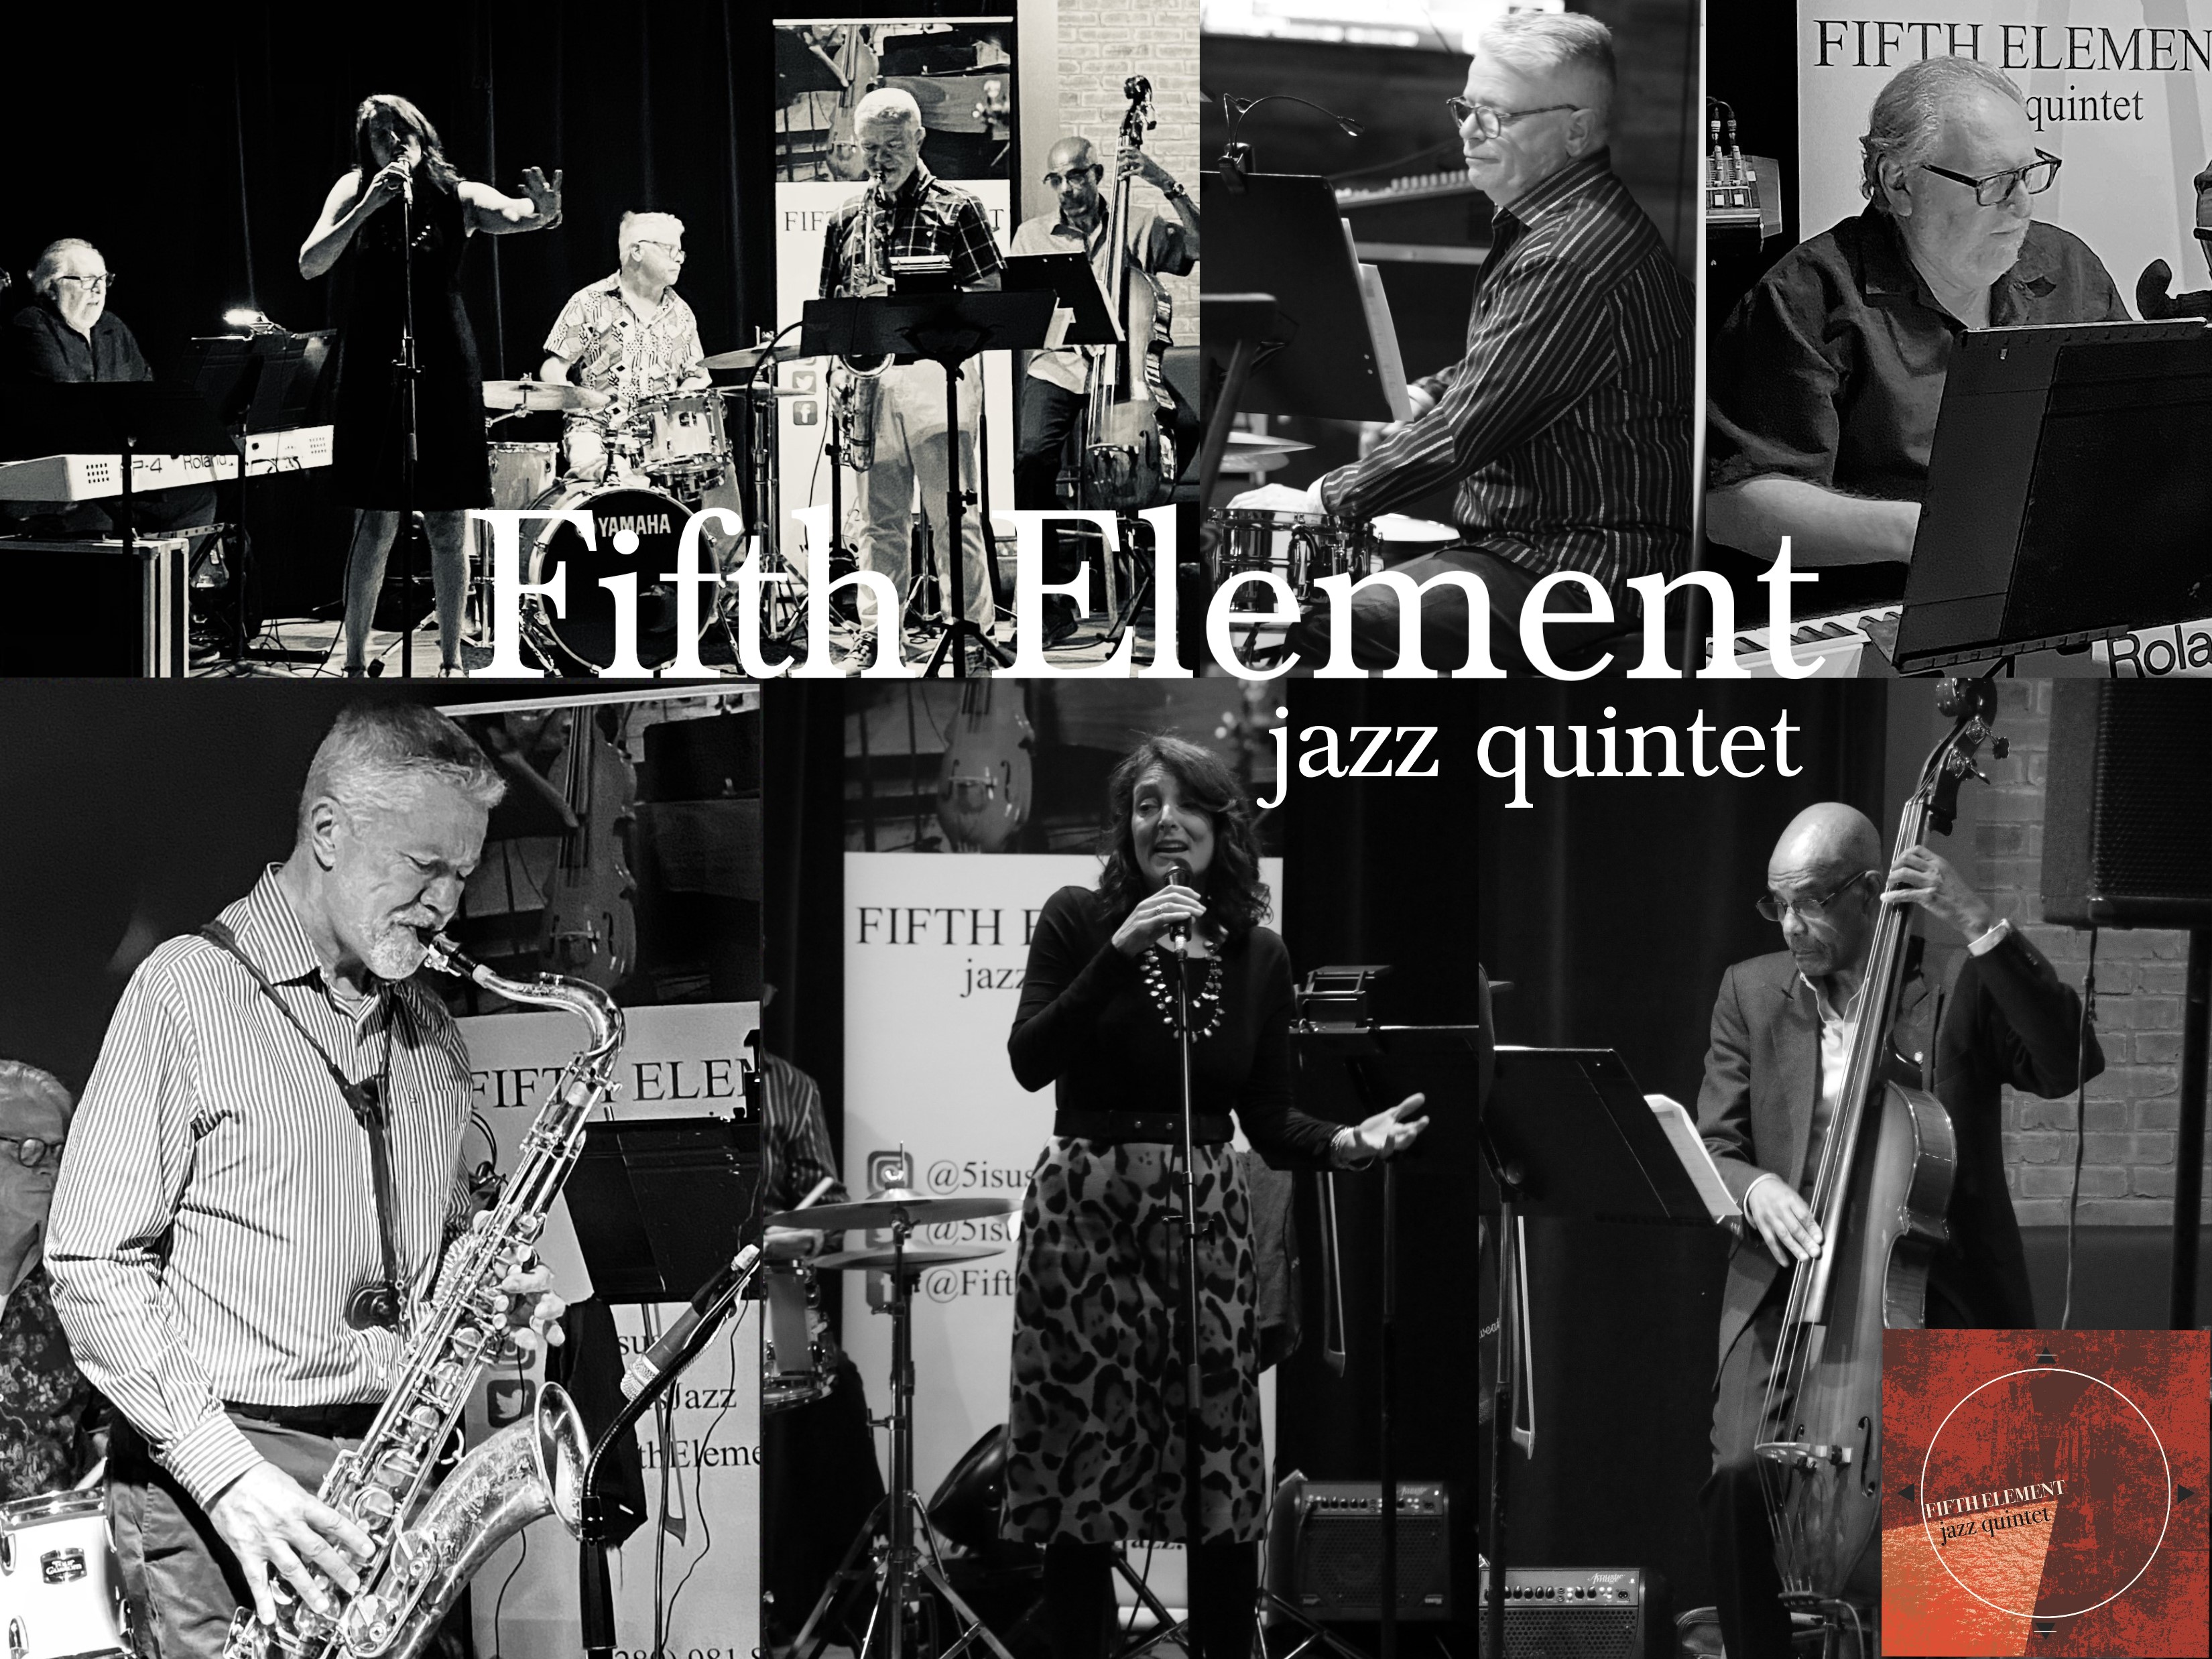 Gin & Jazz with Fifth Element @ Reid’s Distillery